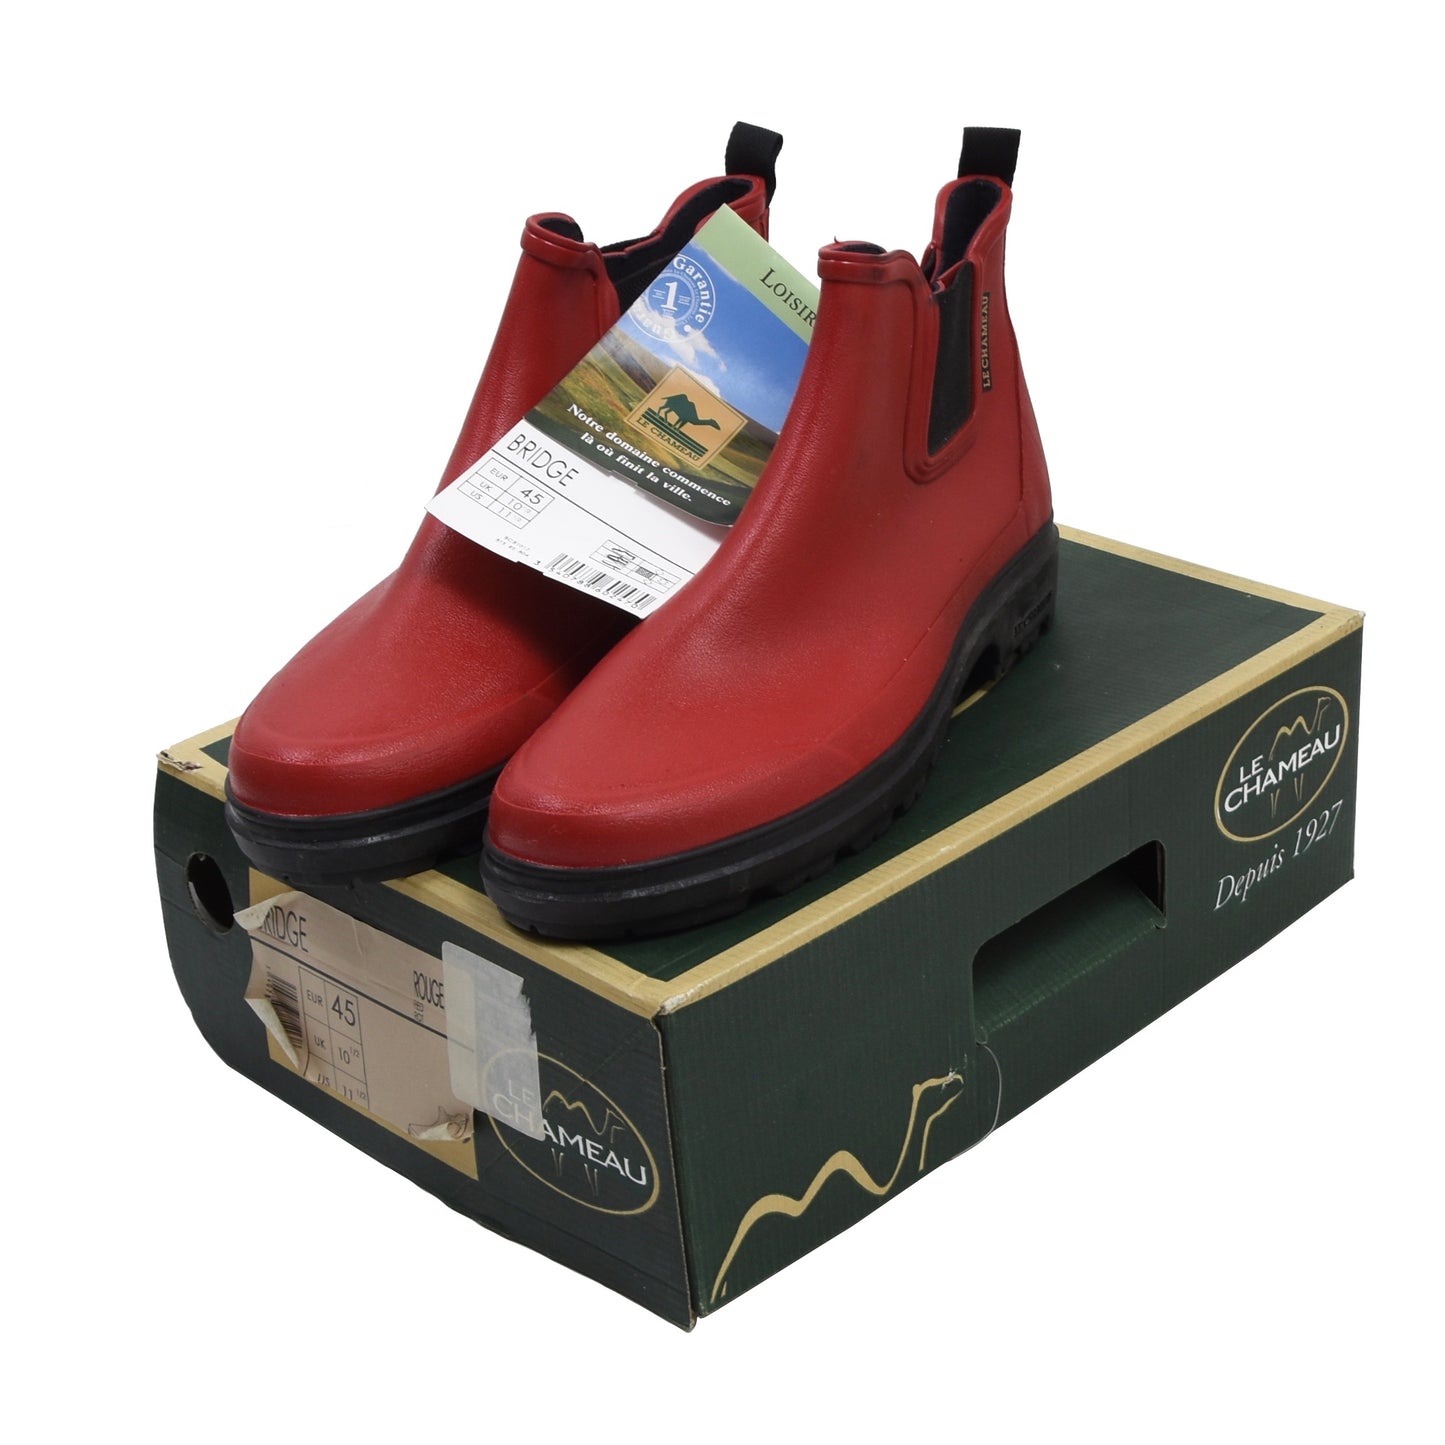 NWB Le Chameau Rubber Boots Size 45 - Red